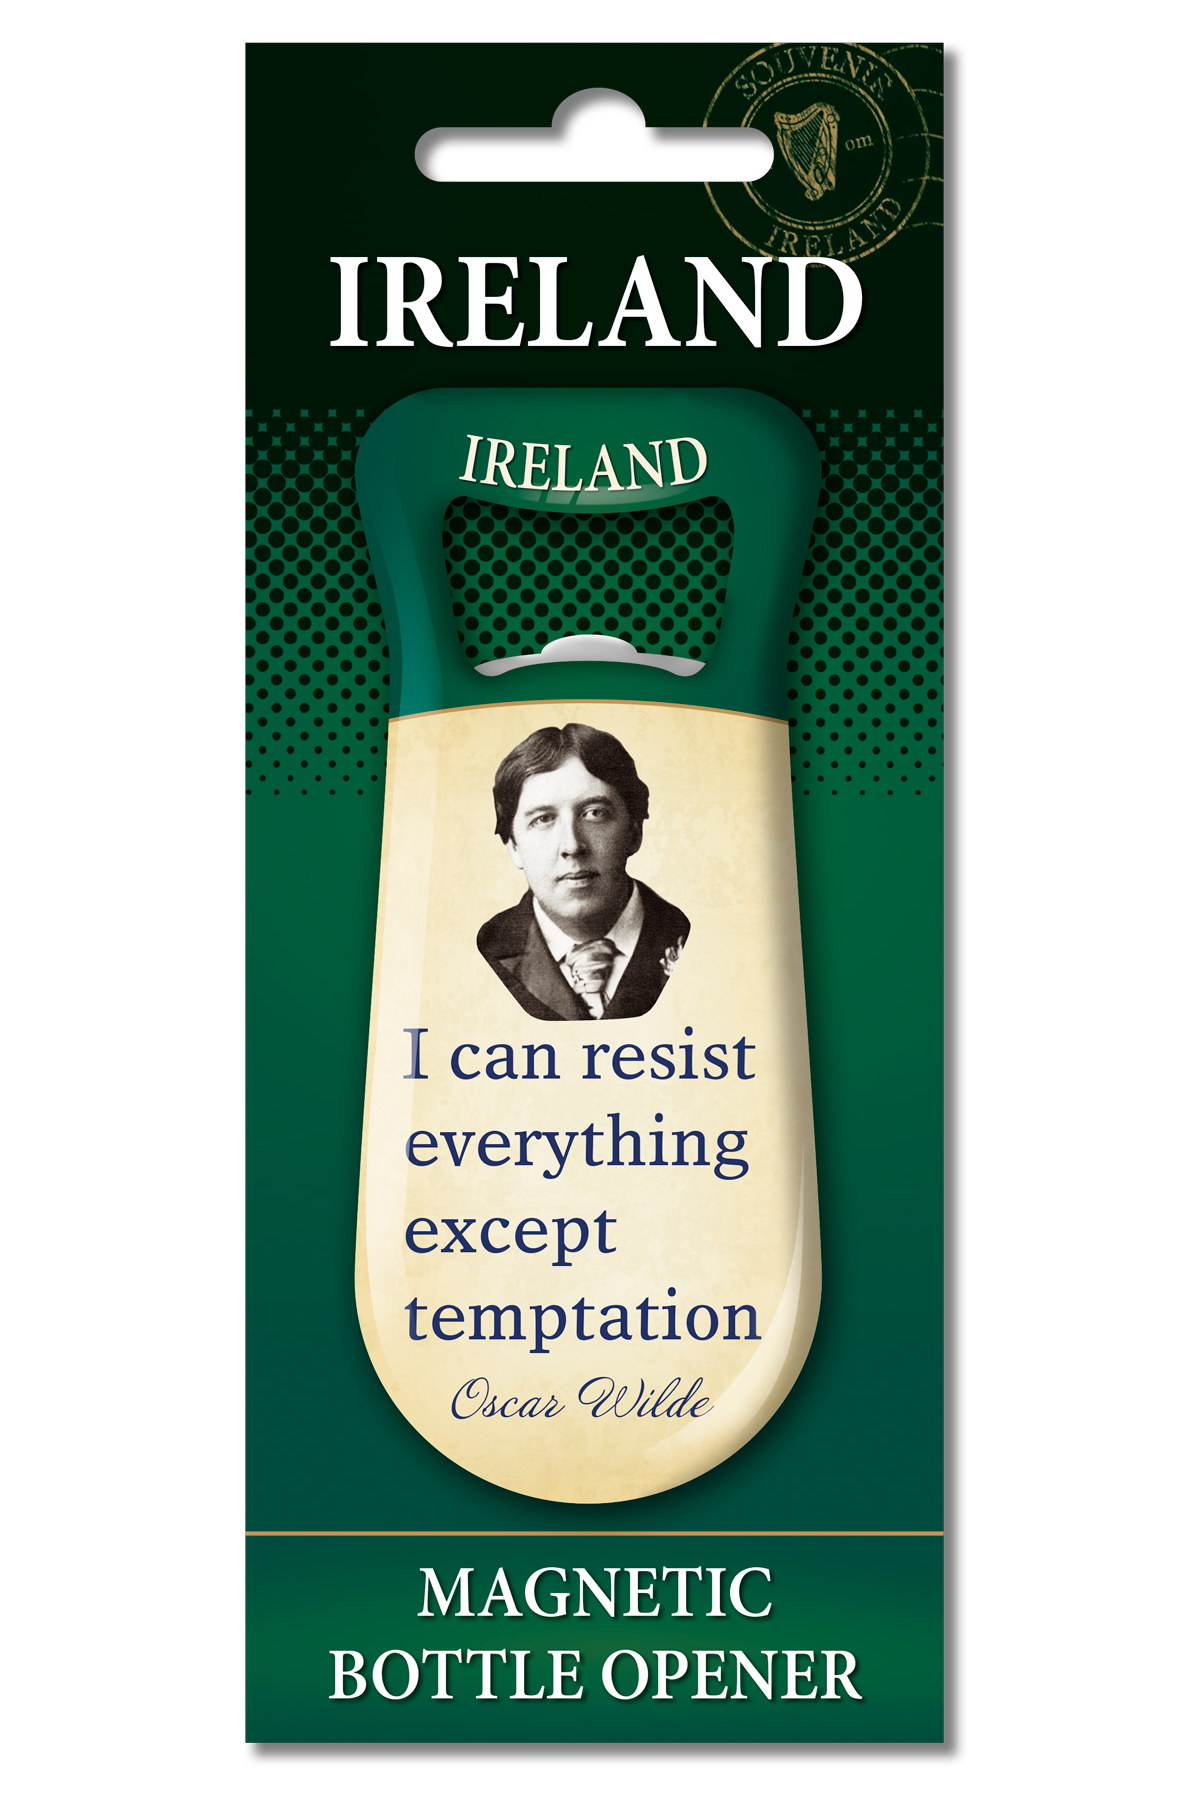 Oscar Wilde Tagged "trinity college" Irish Calendars